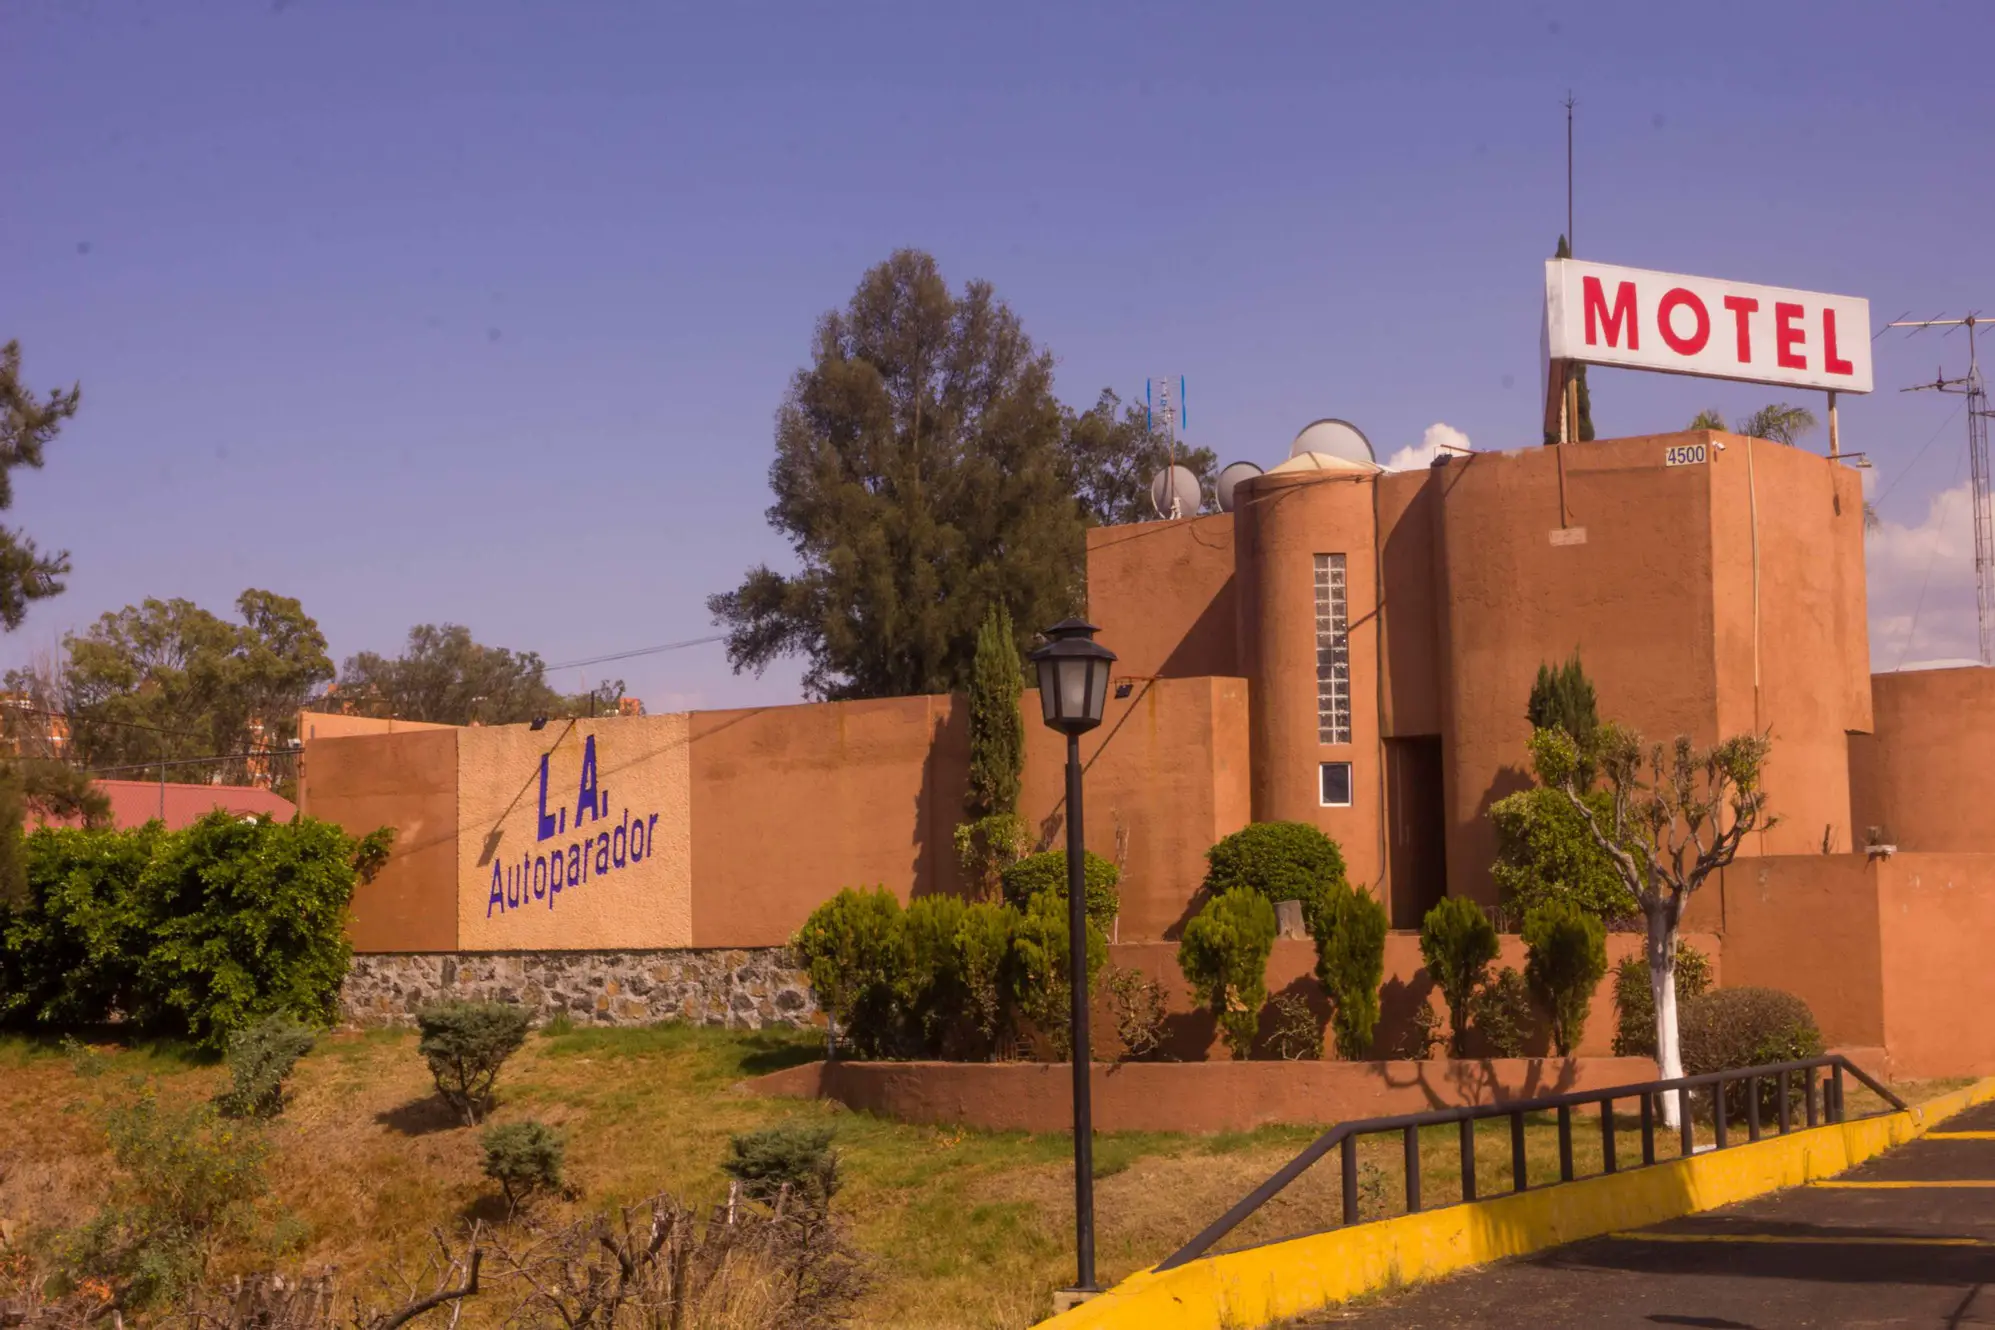 Motel L.A. Autoparador Morelia México